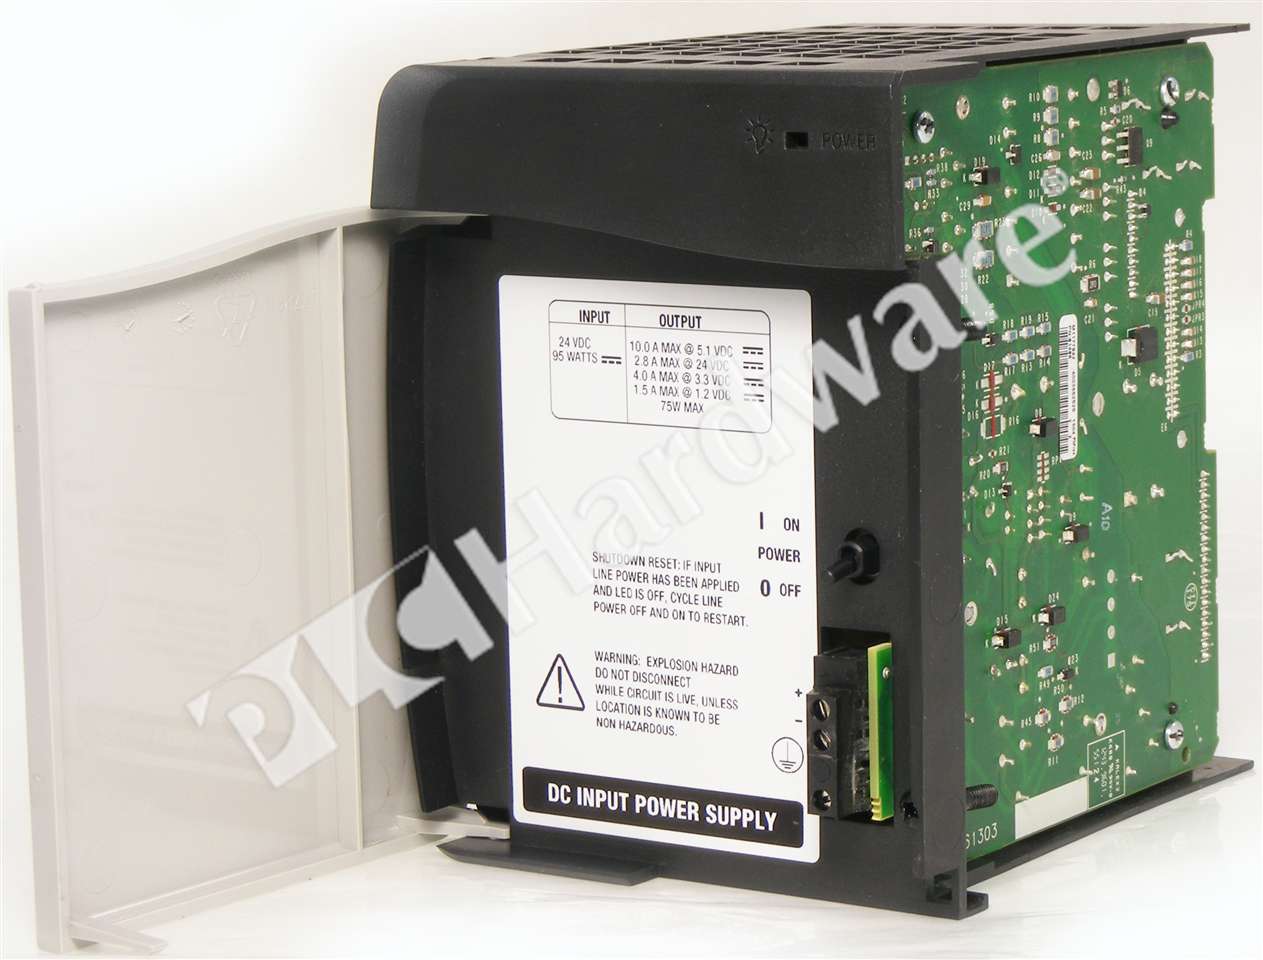 PLC Hardware - Allen Bradley 1756-PB72 Series C, Used PLCH Packaging